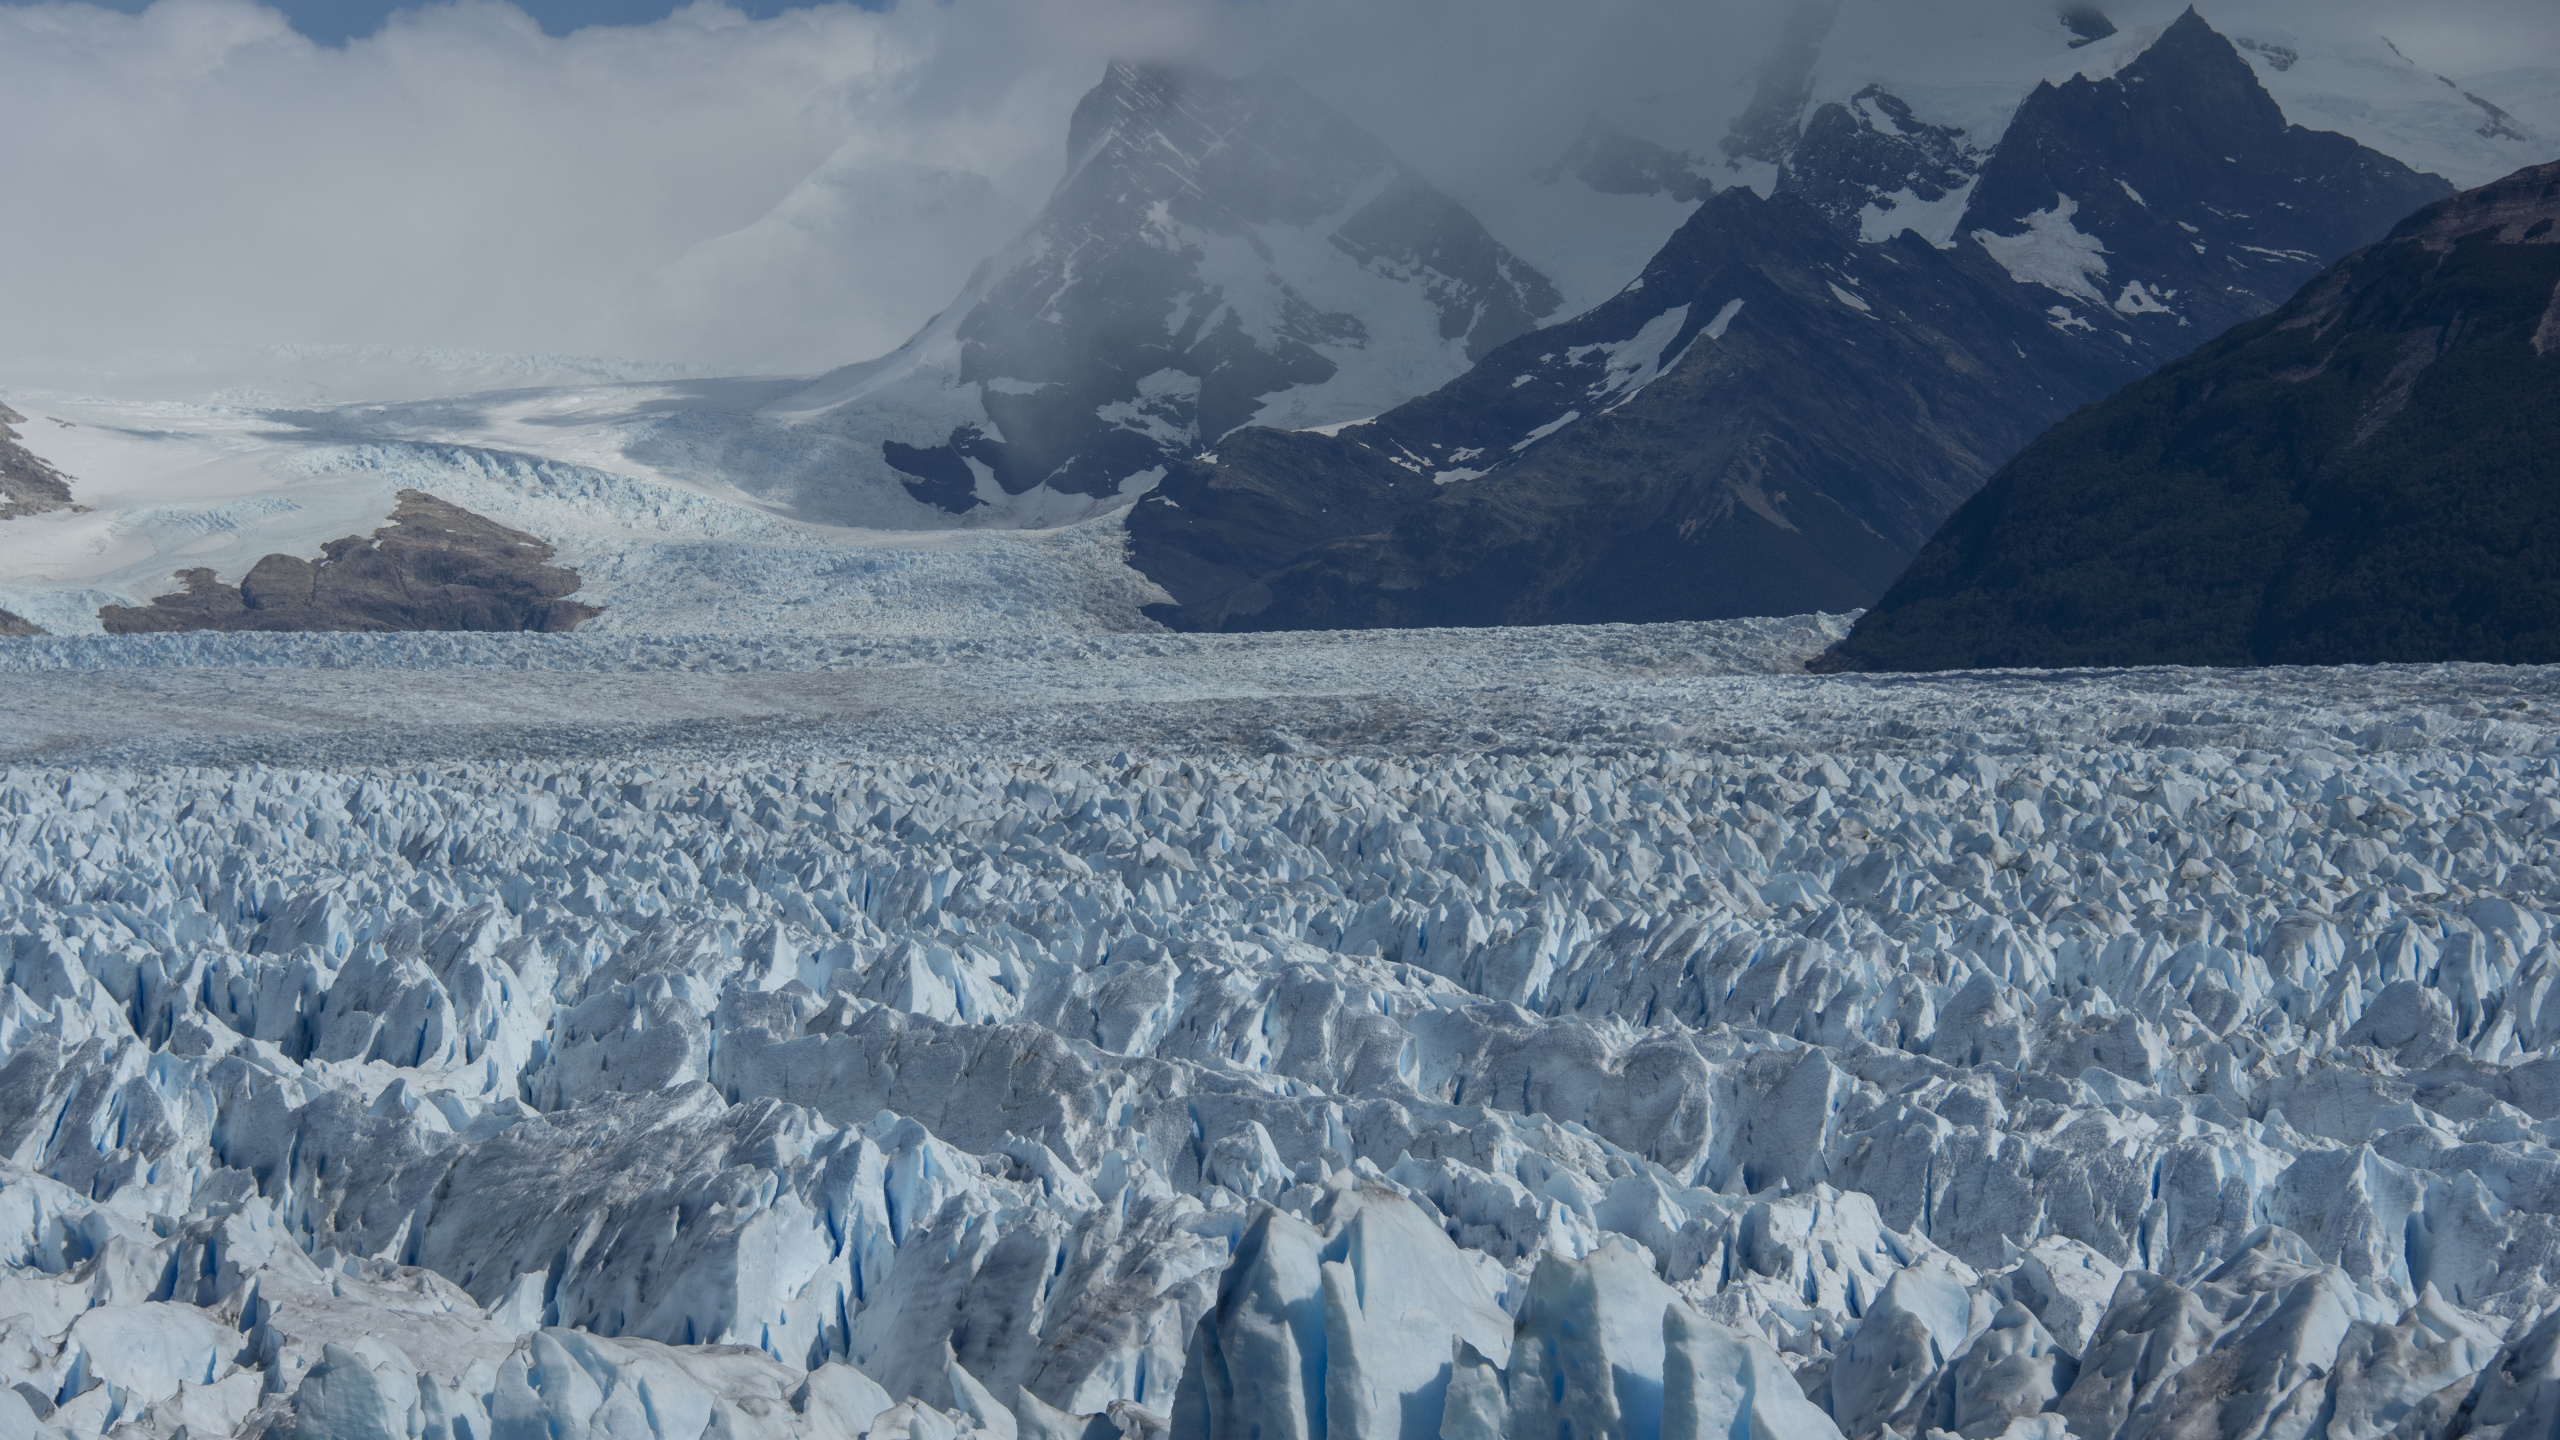 Glacier, Iceberg, Glace, le Lac Glaciaire, Les Reliefs Montagneux. Wallpaper in 2560x1440 Resolution